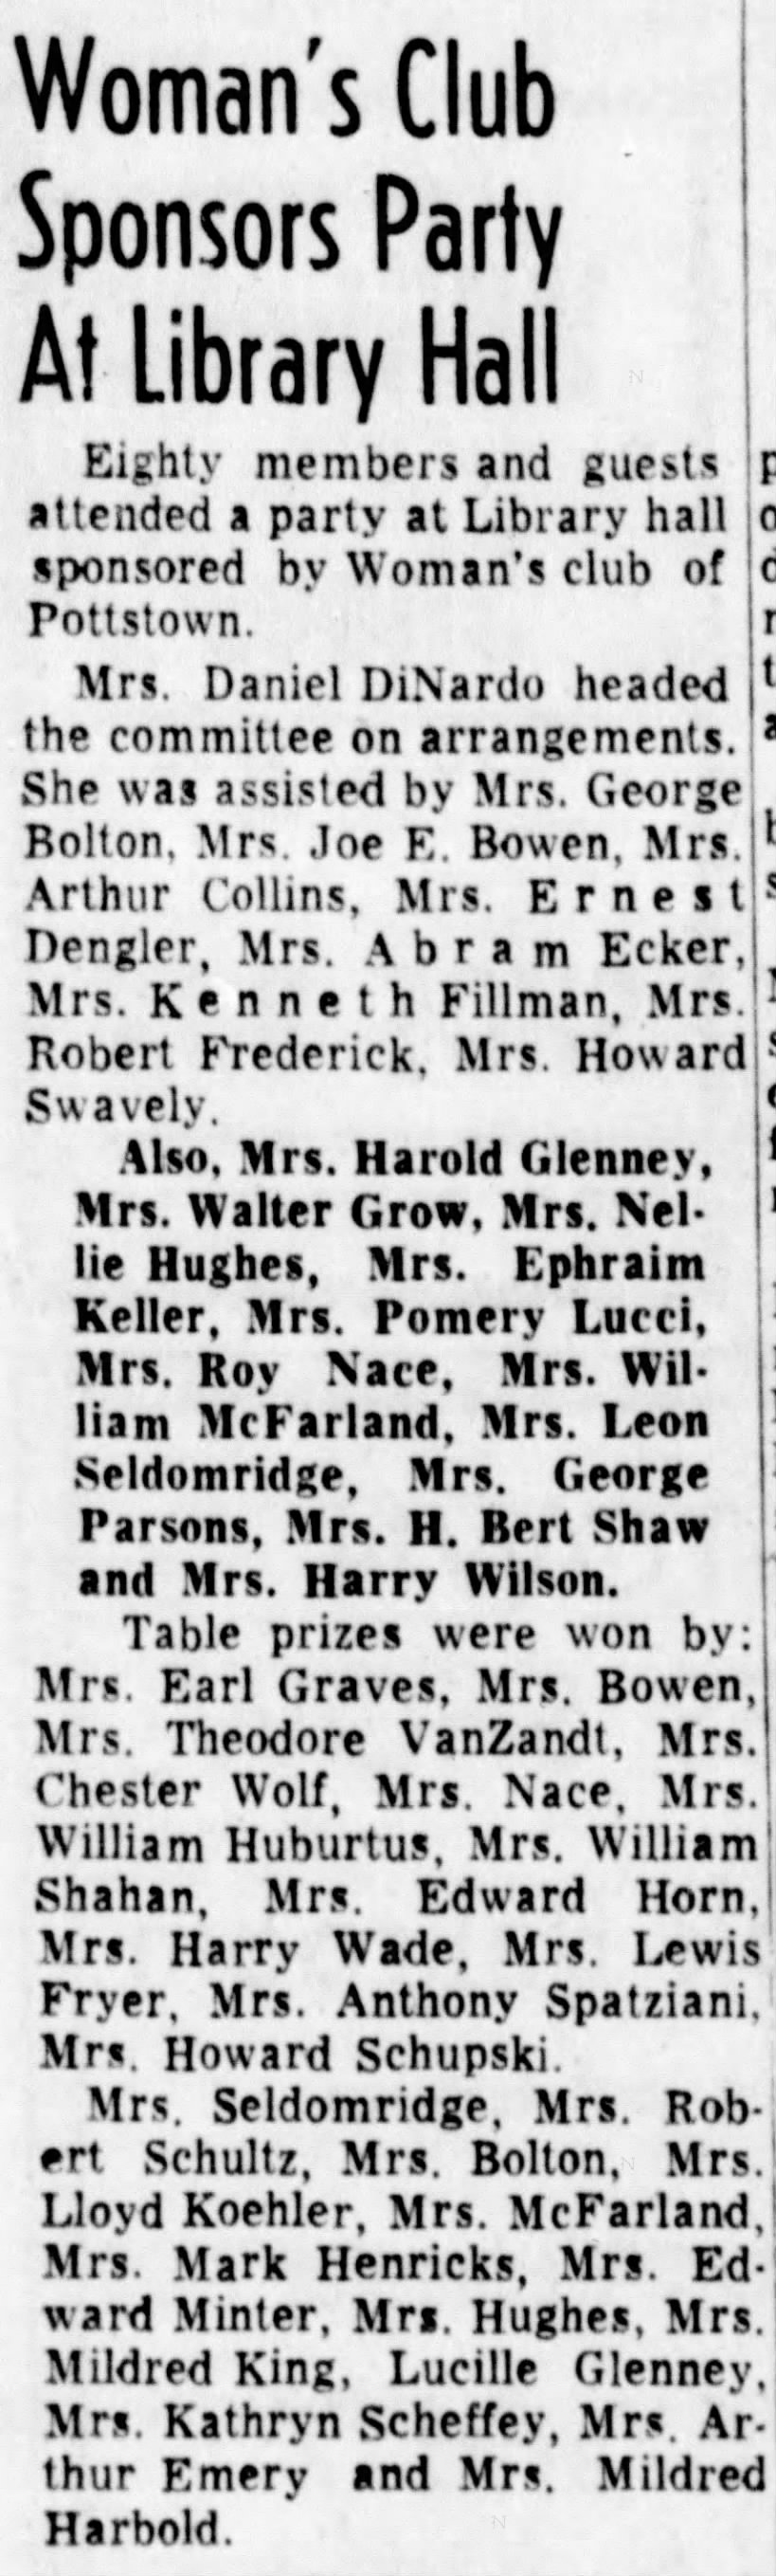 Mrs. George Seldomridge, woman's club sponsors party, Pottstown, PA, 1959